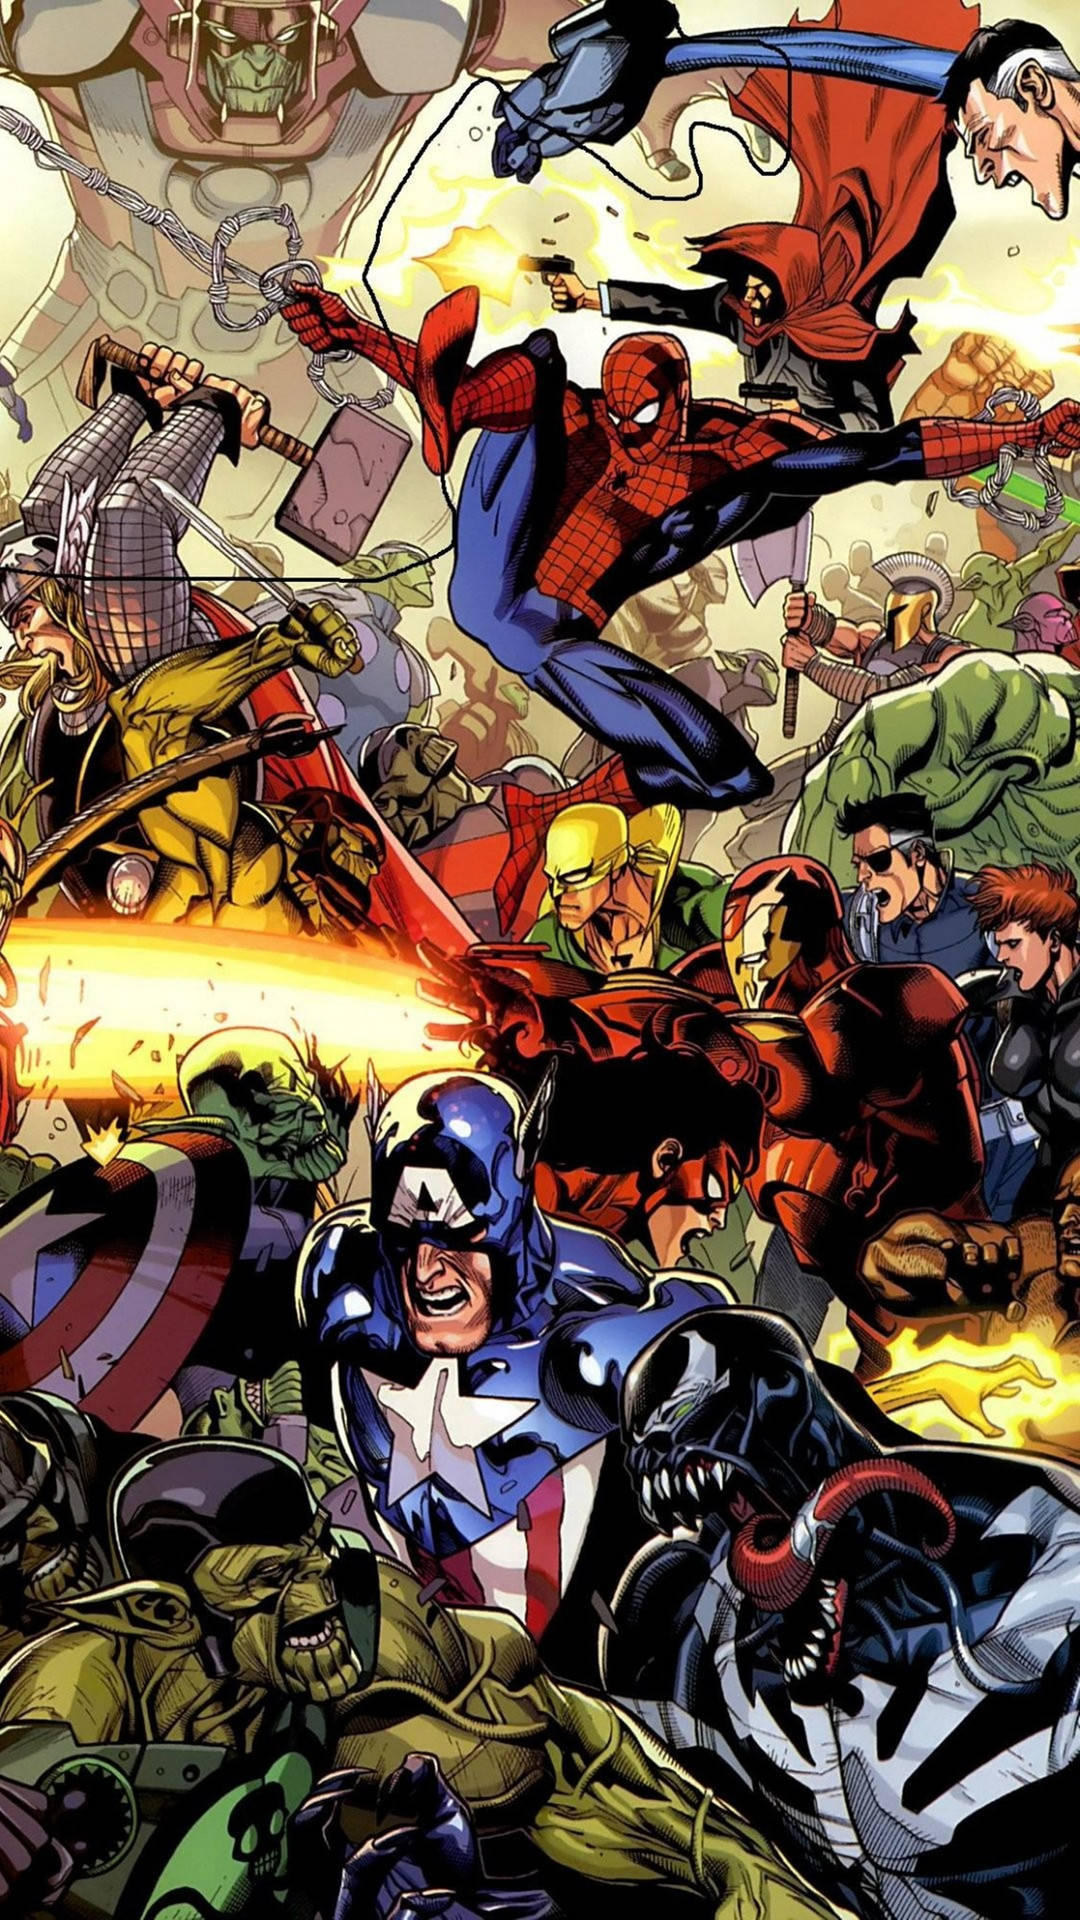 Marvelcomics-karaktärer I En Strid. Wallpaper